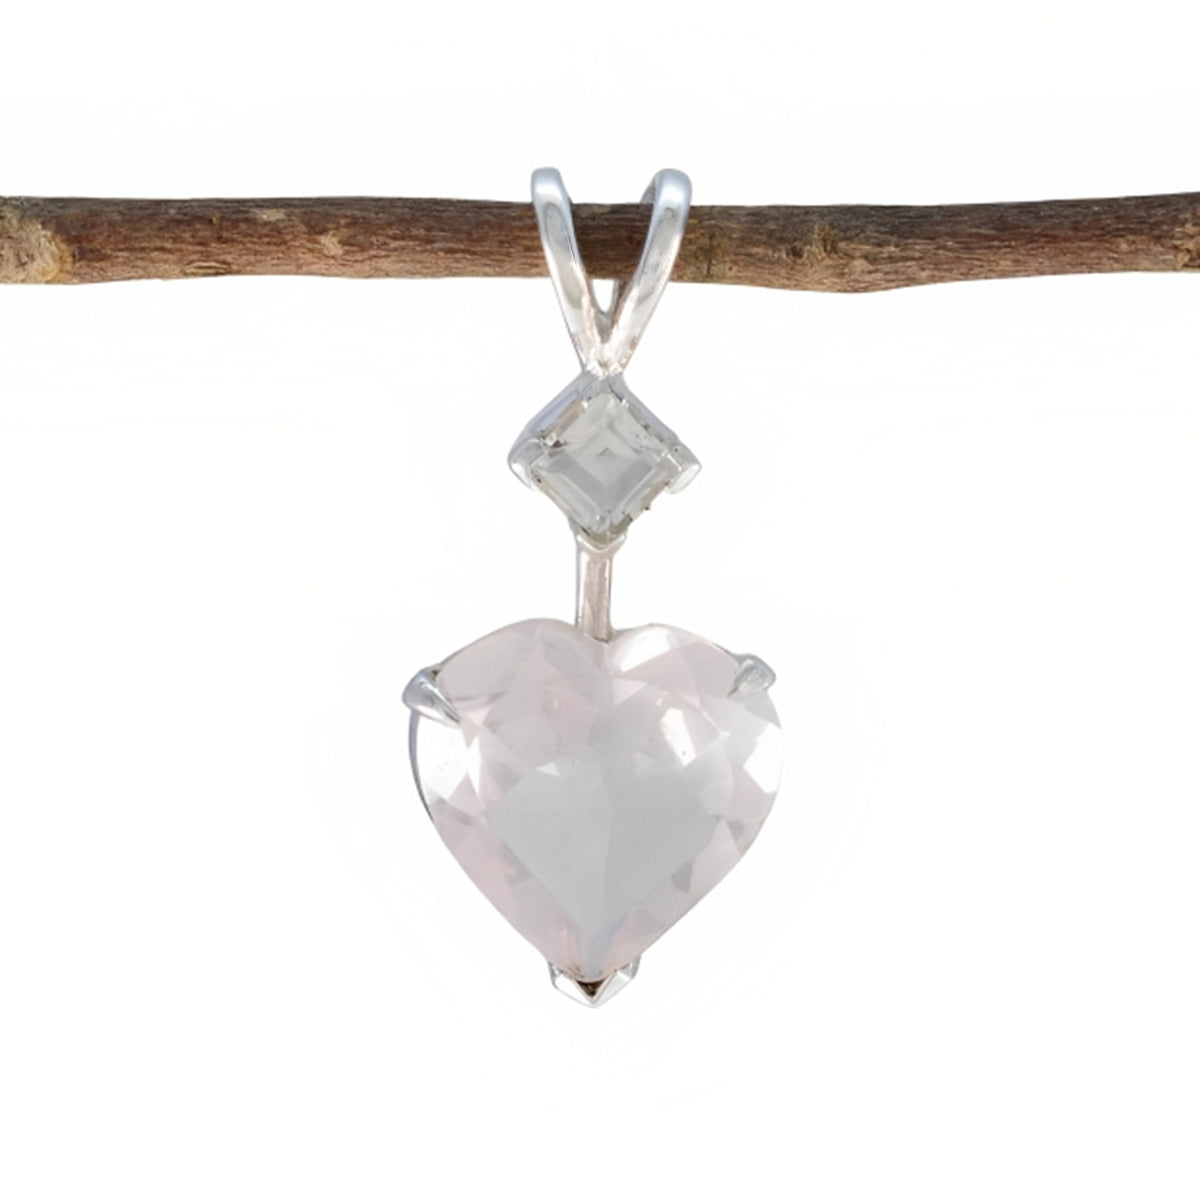 Riyo smashing gema corazón facetado cuarzo rosa 1052 colgante de plata esterlina regalo para novia